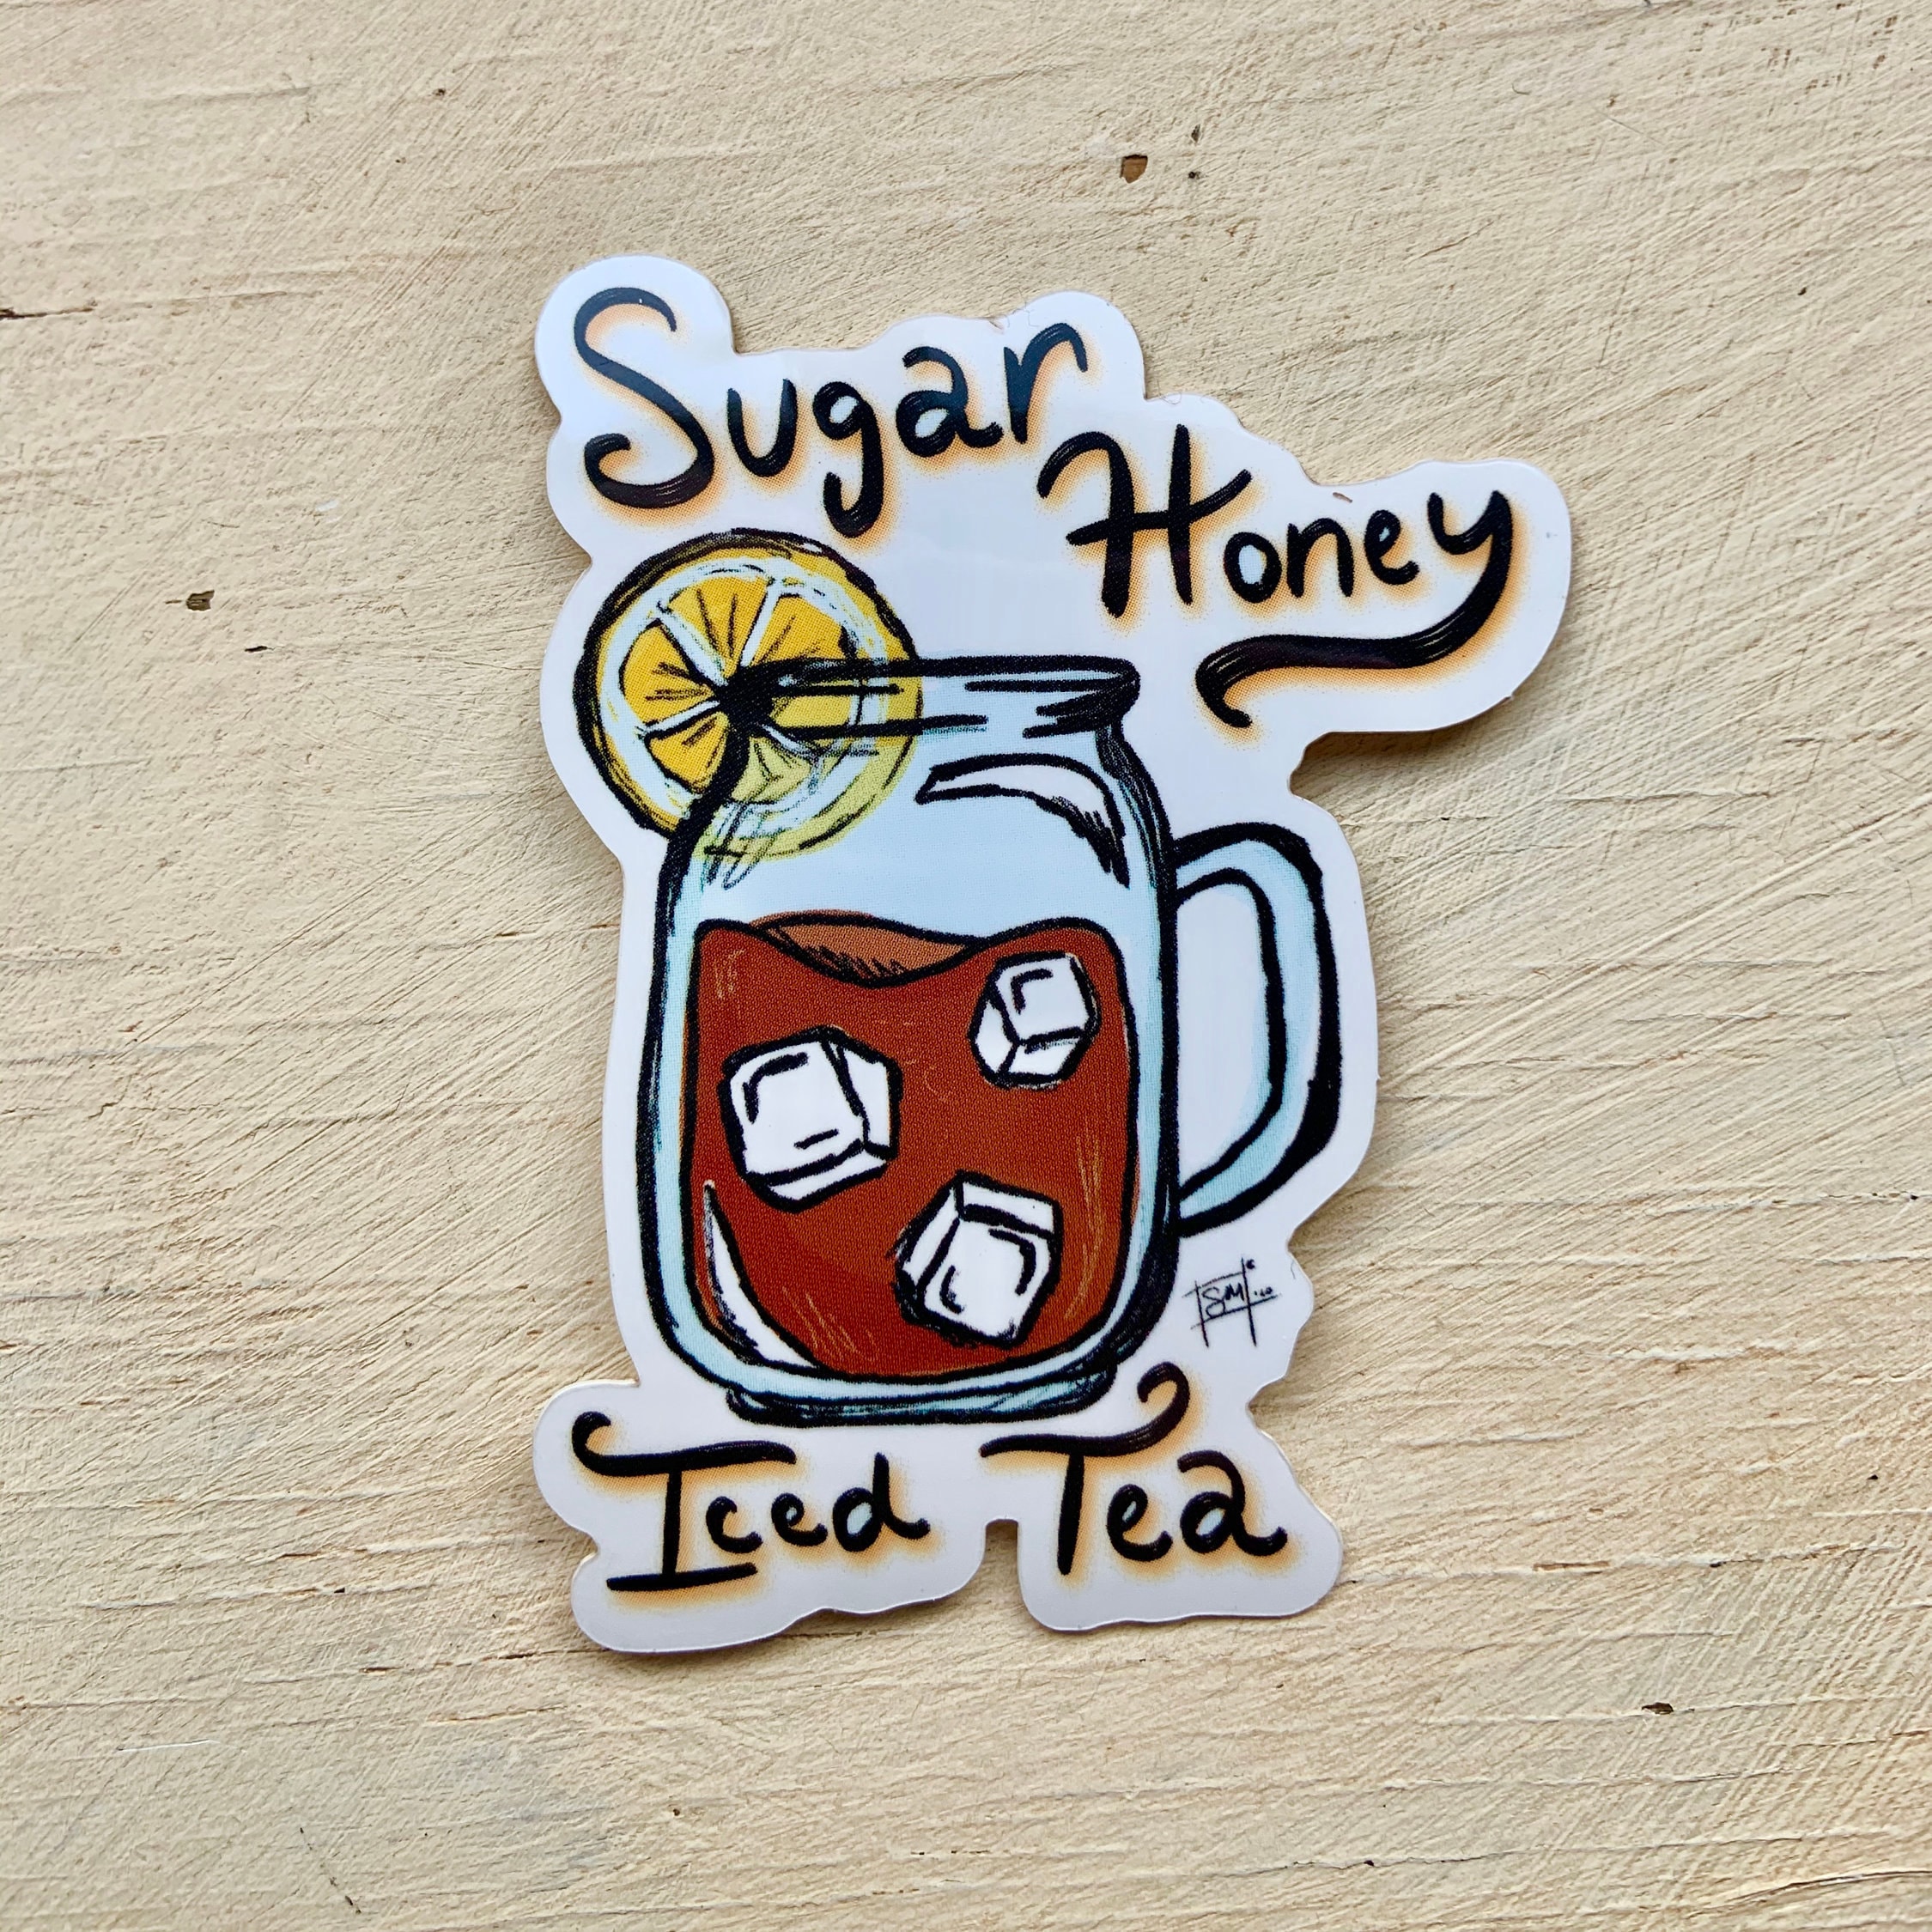 Honey tea sugar iced 